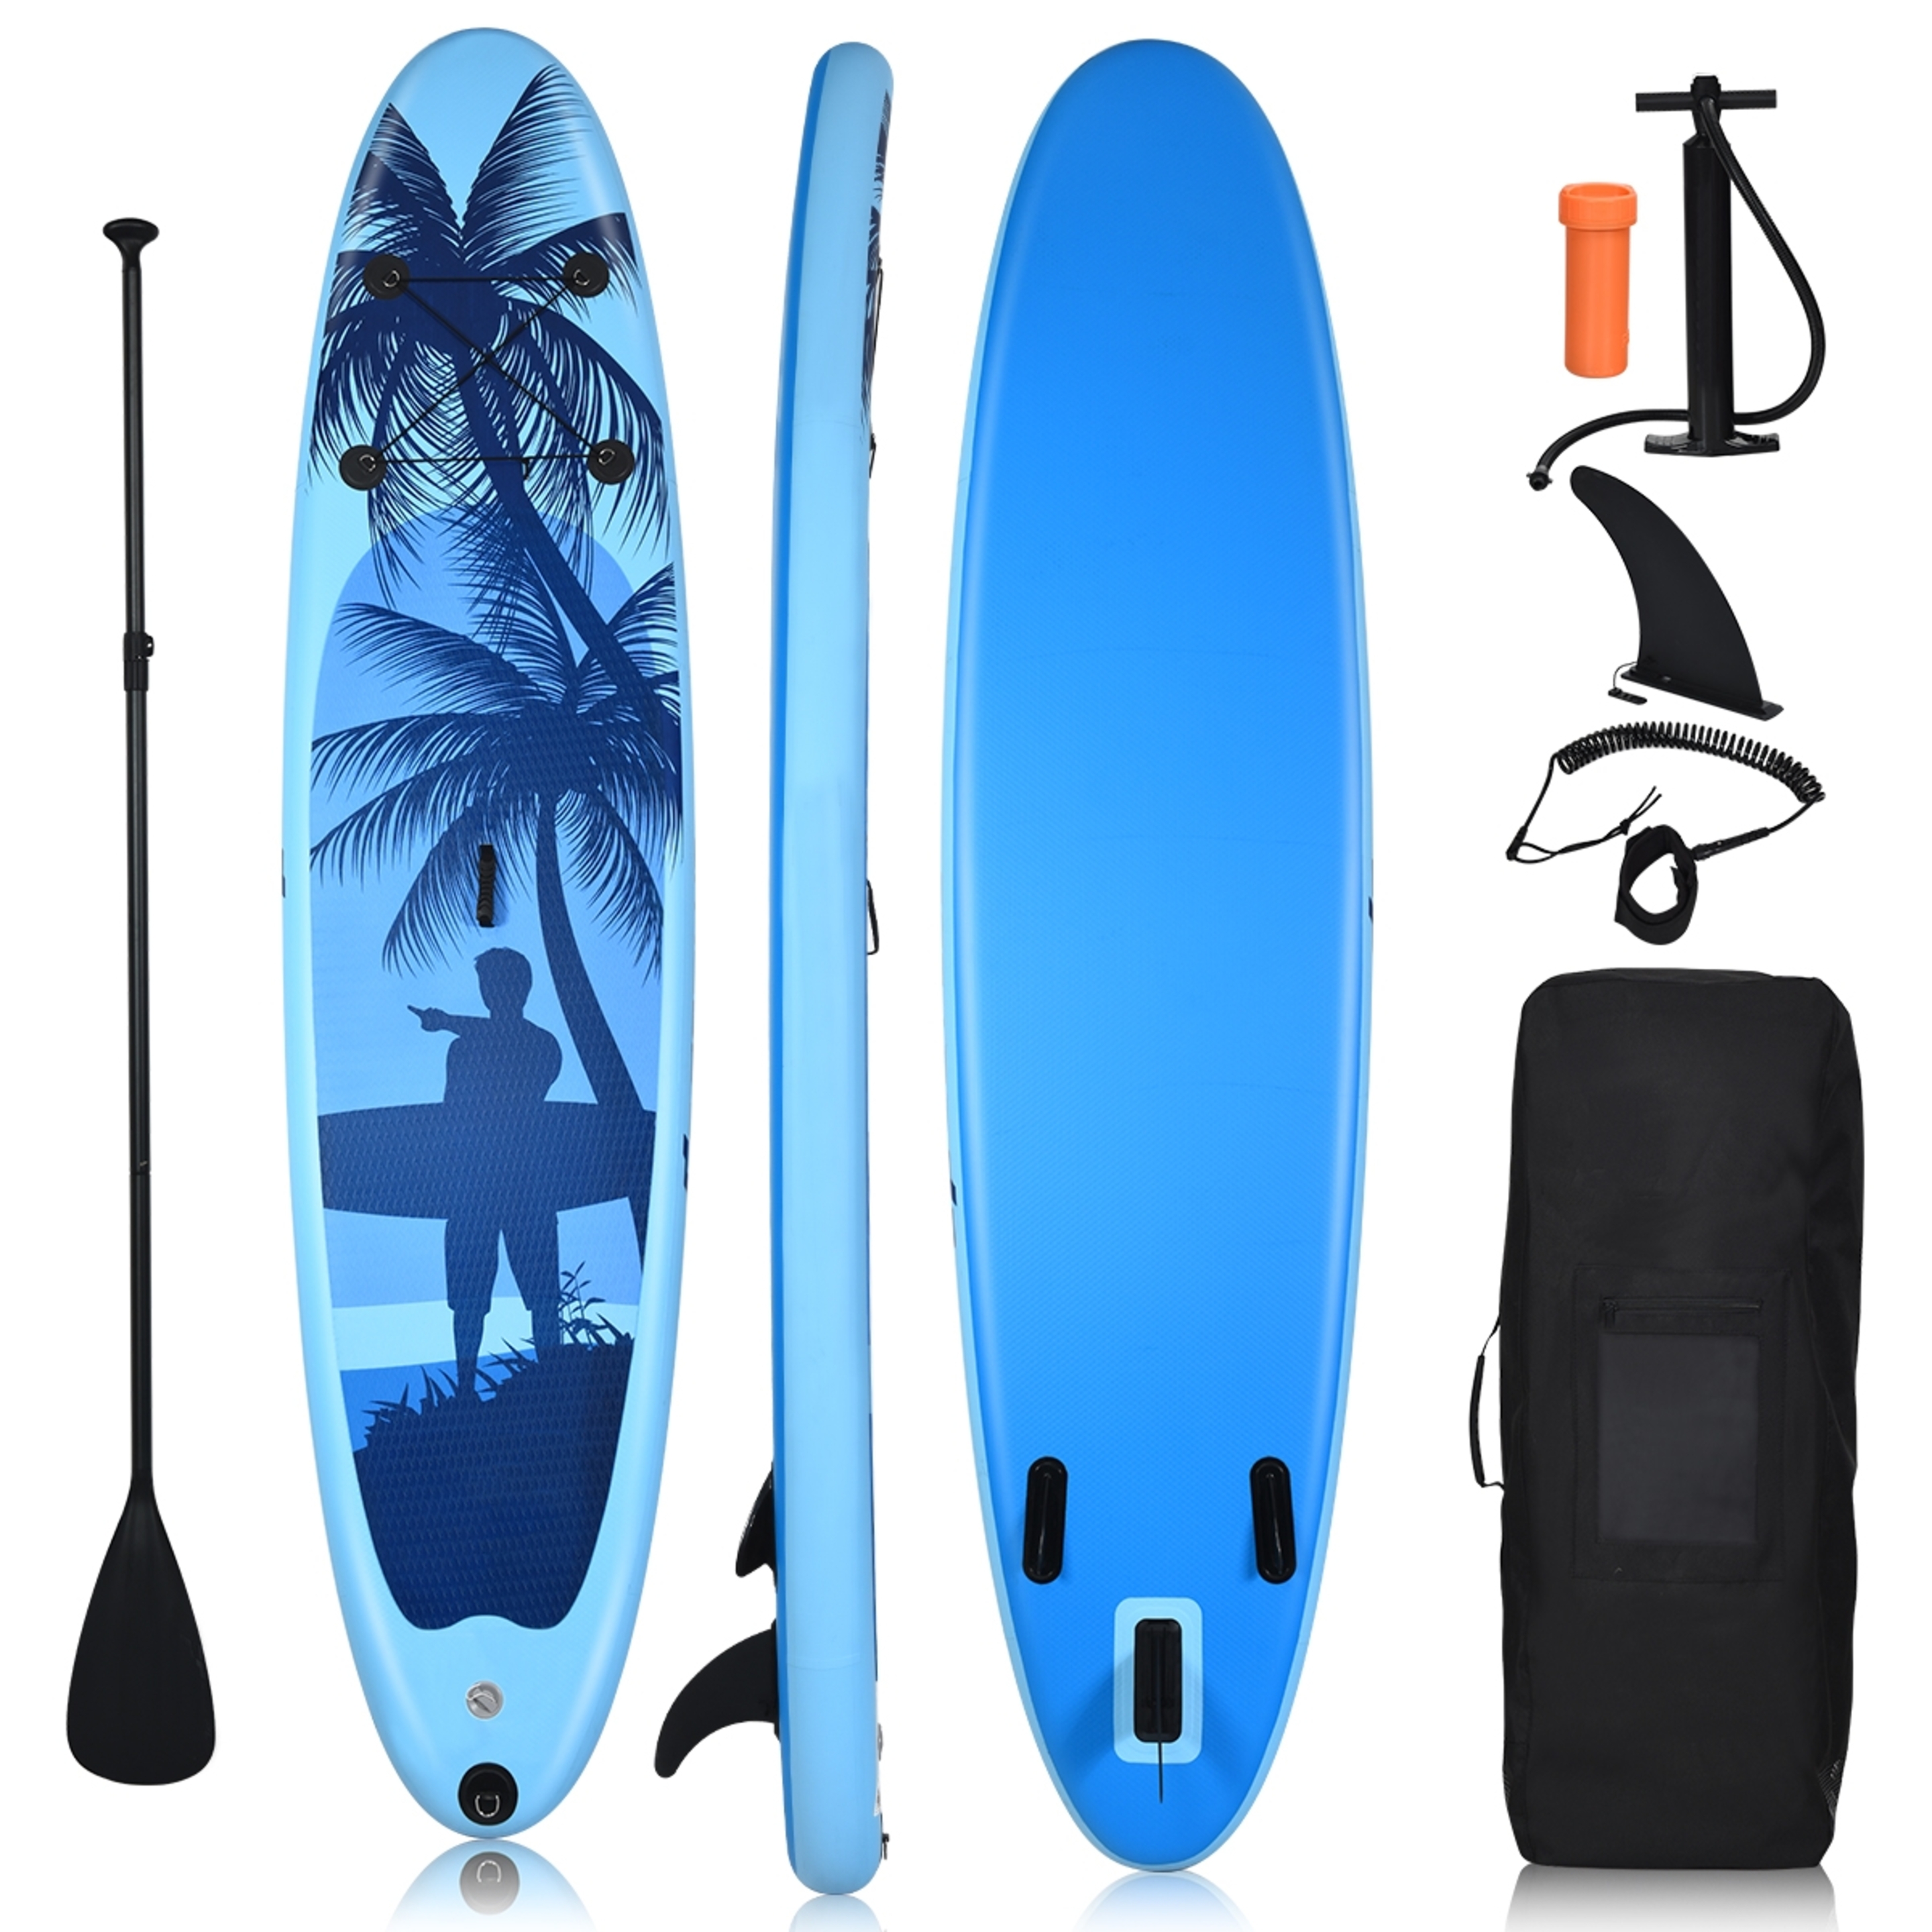 Tabla Hinchable Costway Pvc Paddle Surf Sup 335 X 76 X 16 Cm - azul - 